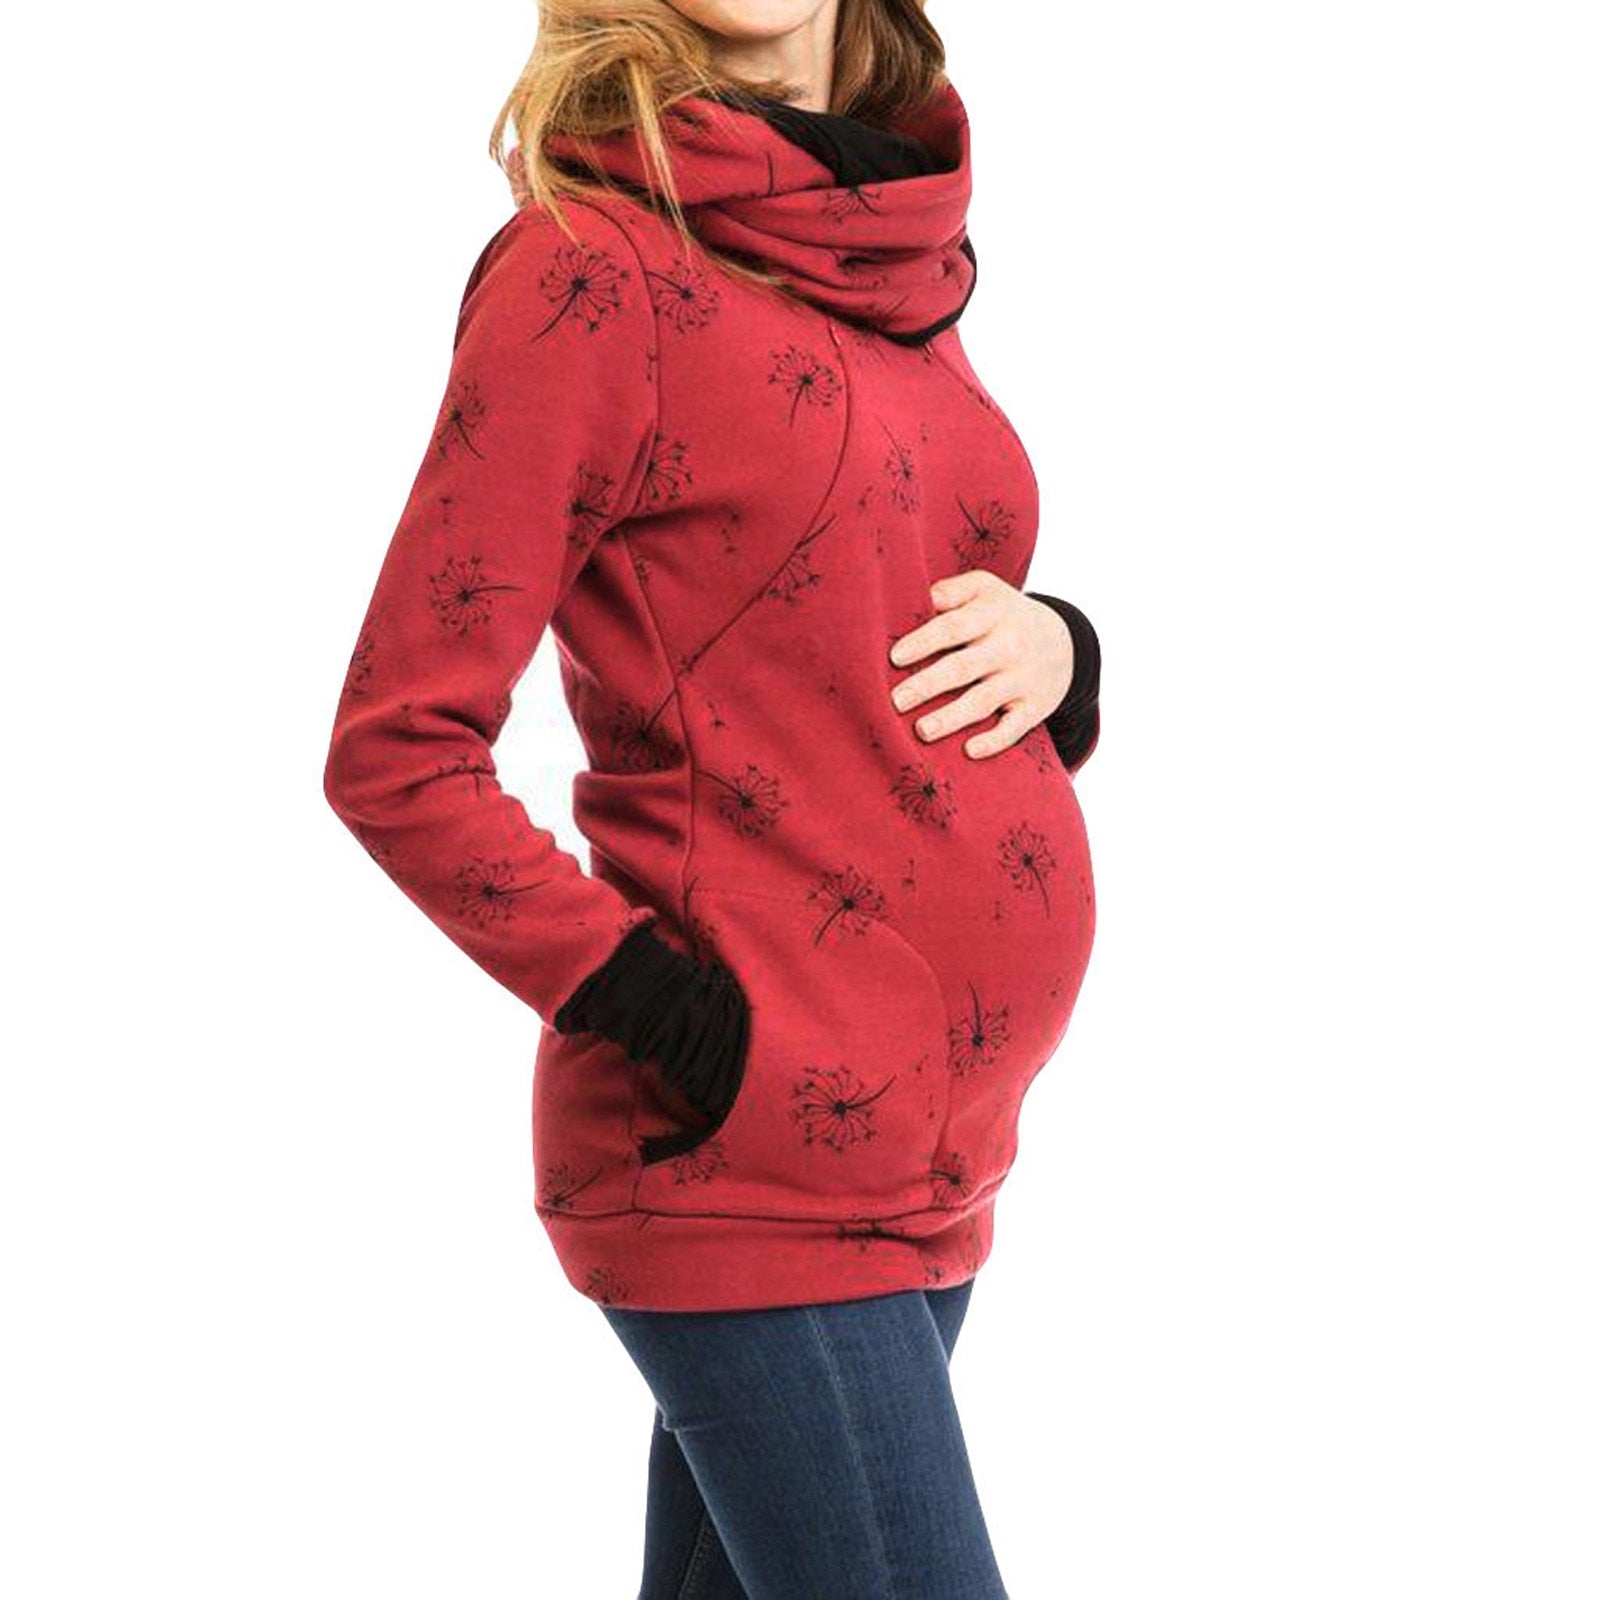 Maternity Nursing Hoodie Sweatshirt Winter Autumn Pregnancy Clothes Pregnant Women Breastfeeding Sweater Shirts T Shirt Top